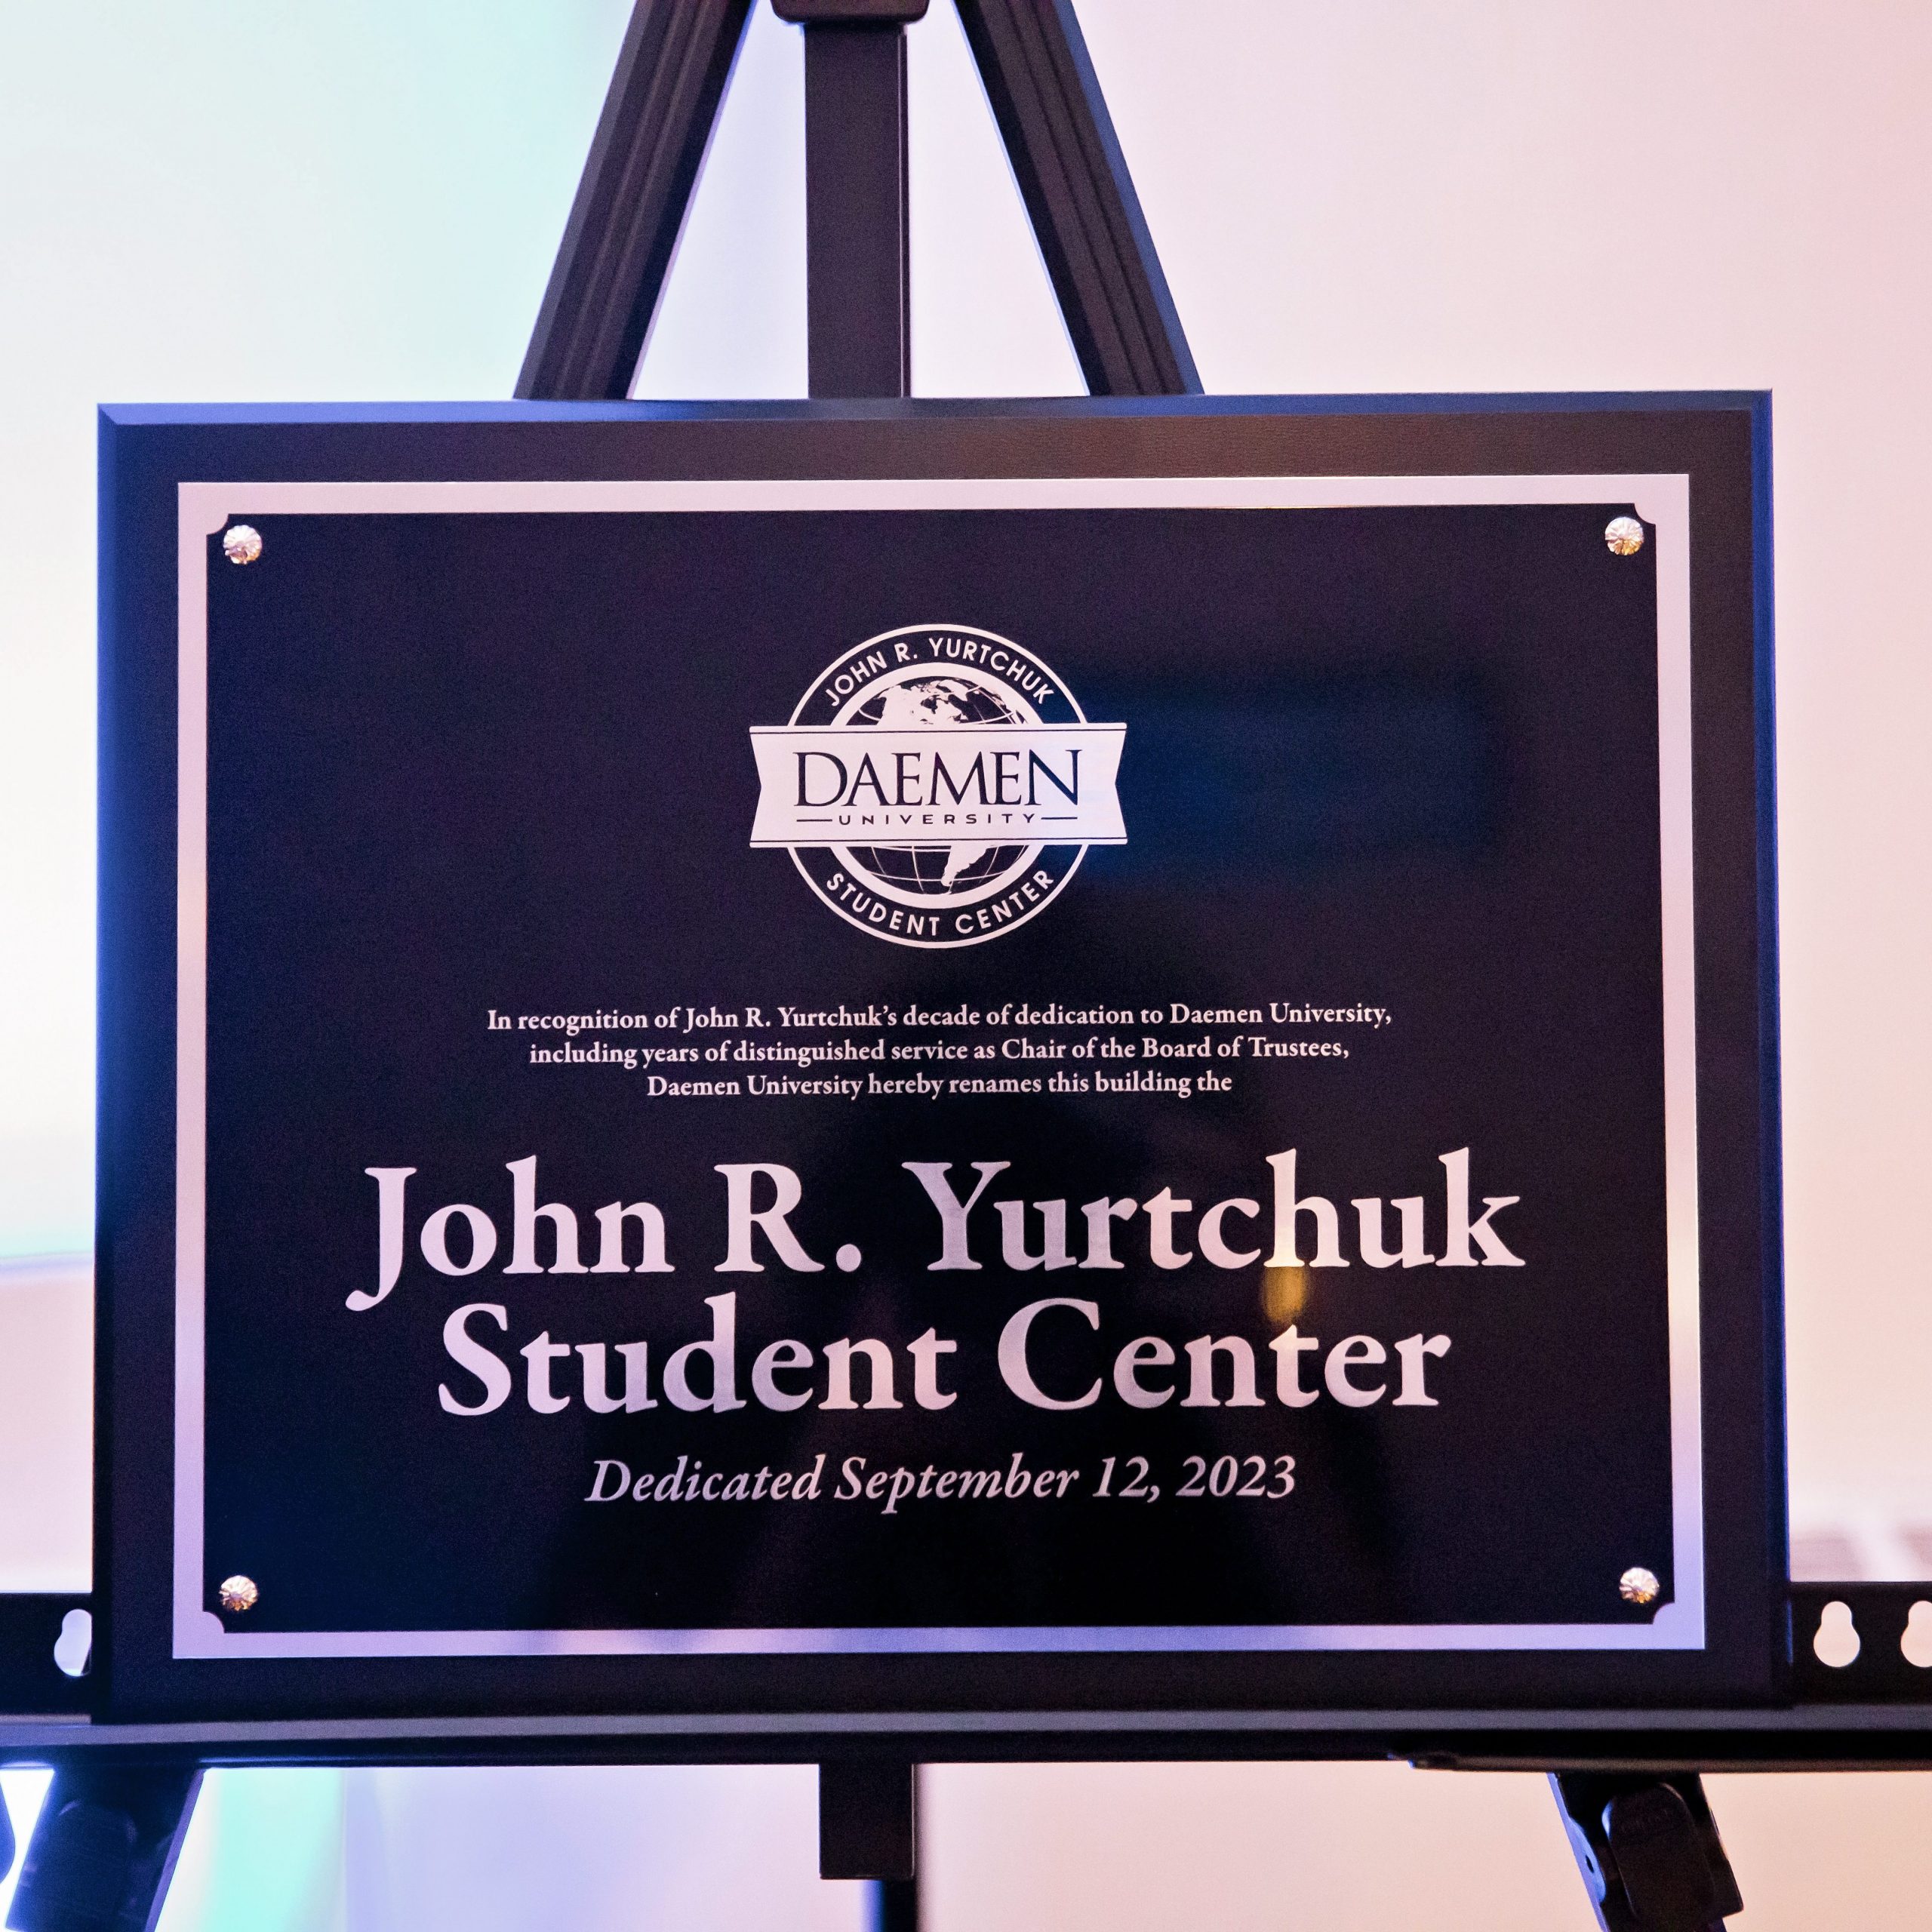 John R. Yurtchuk Student Center dedication plaque